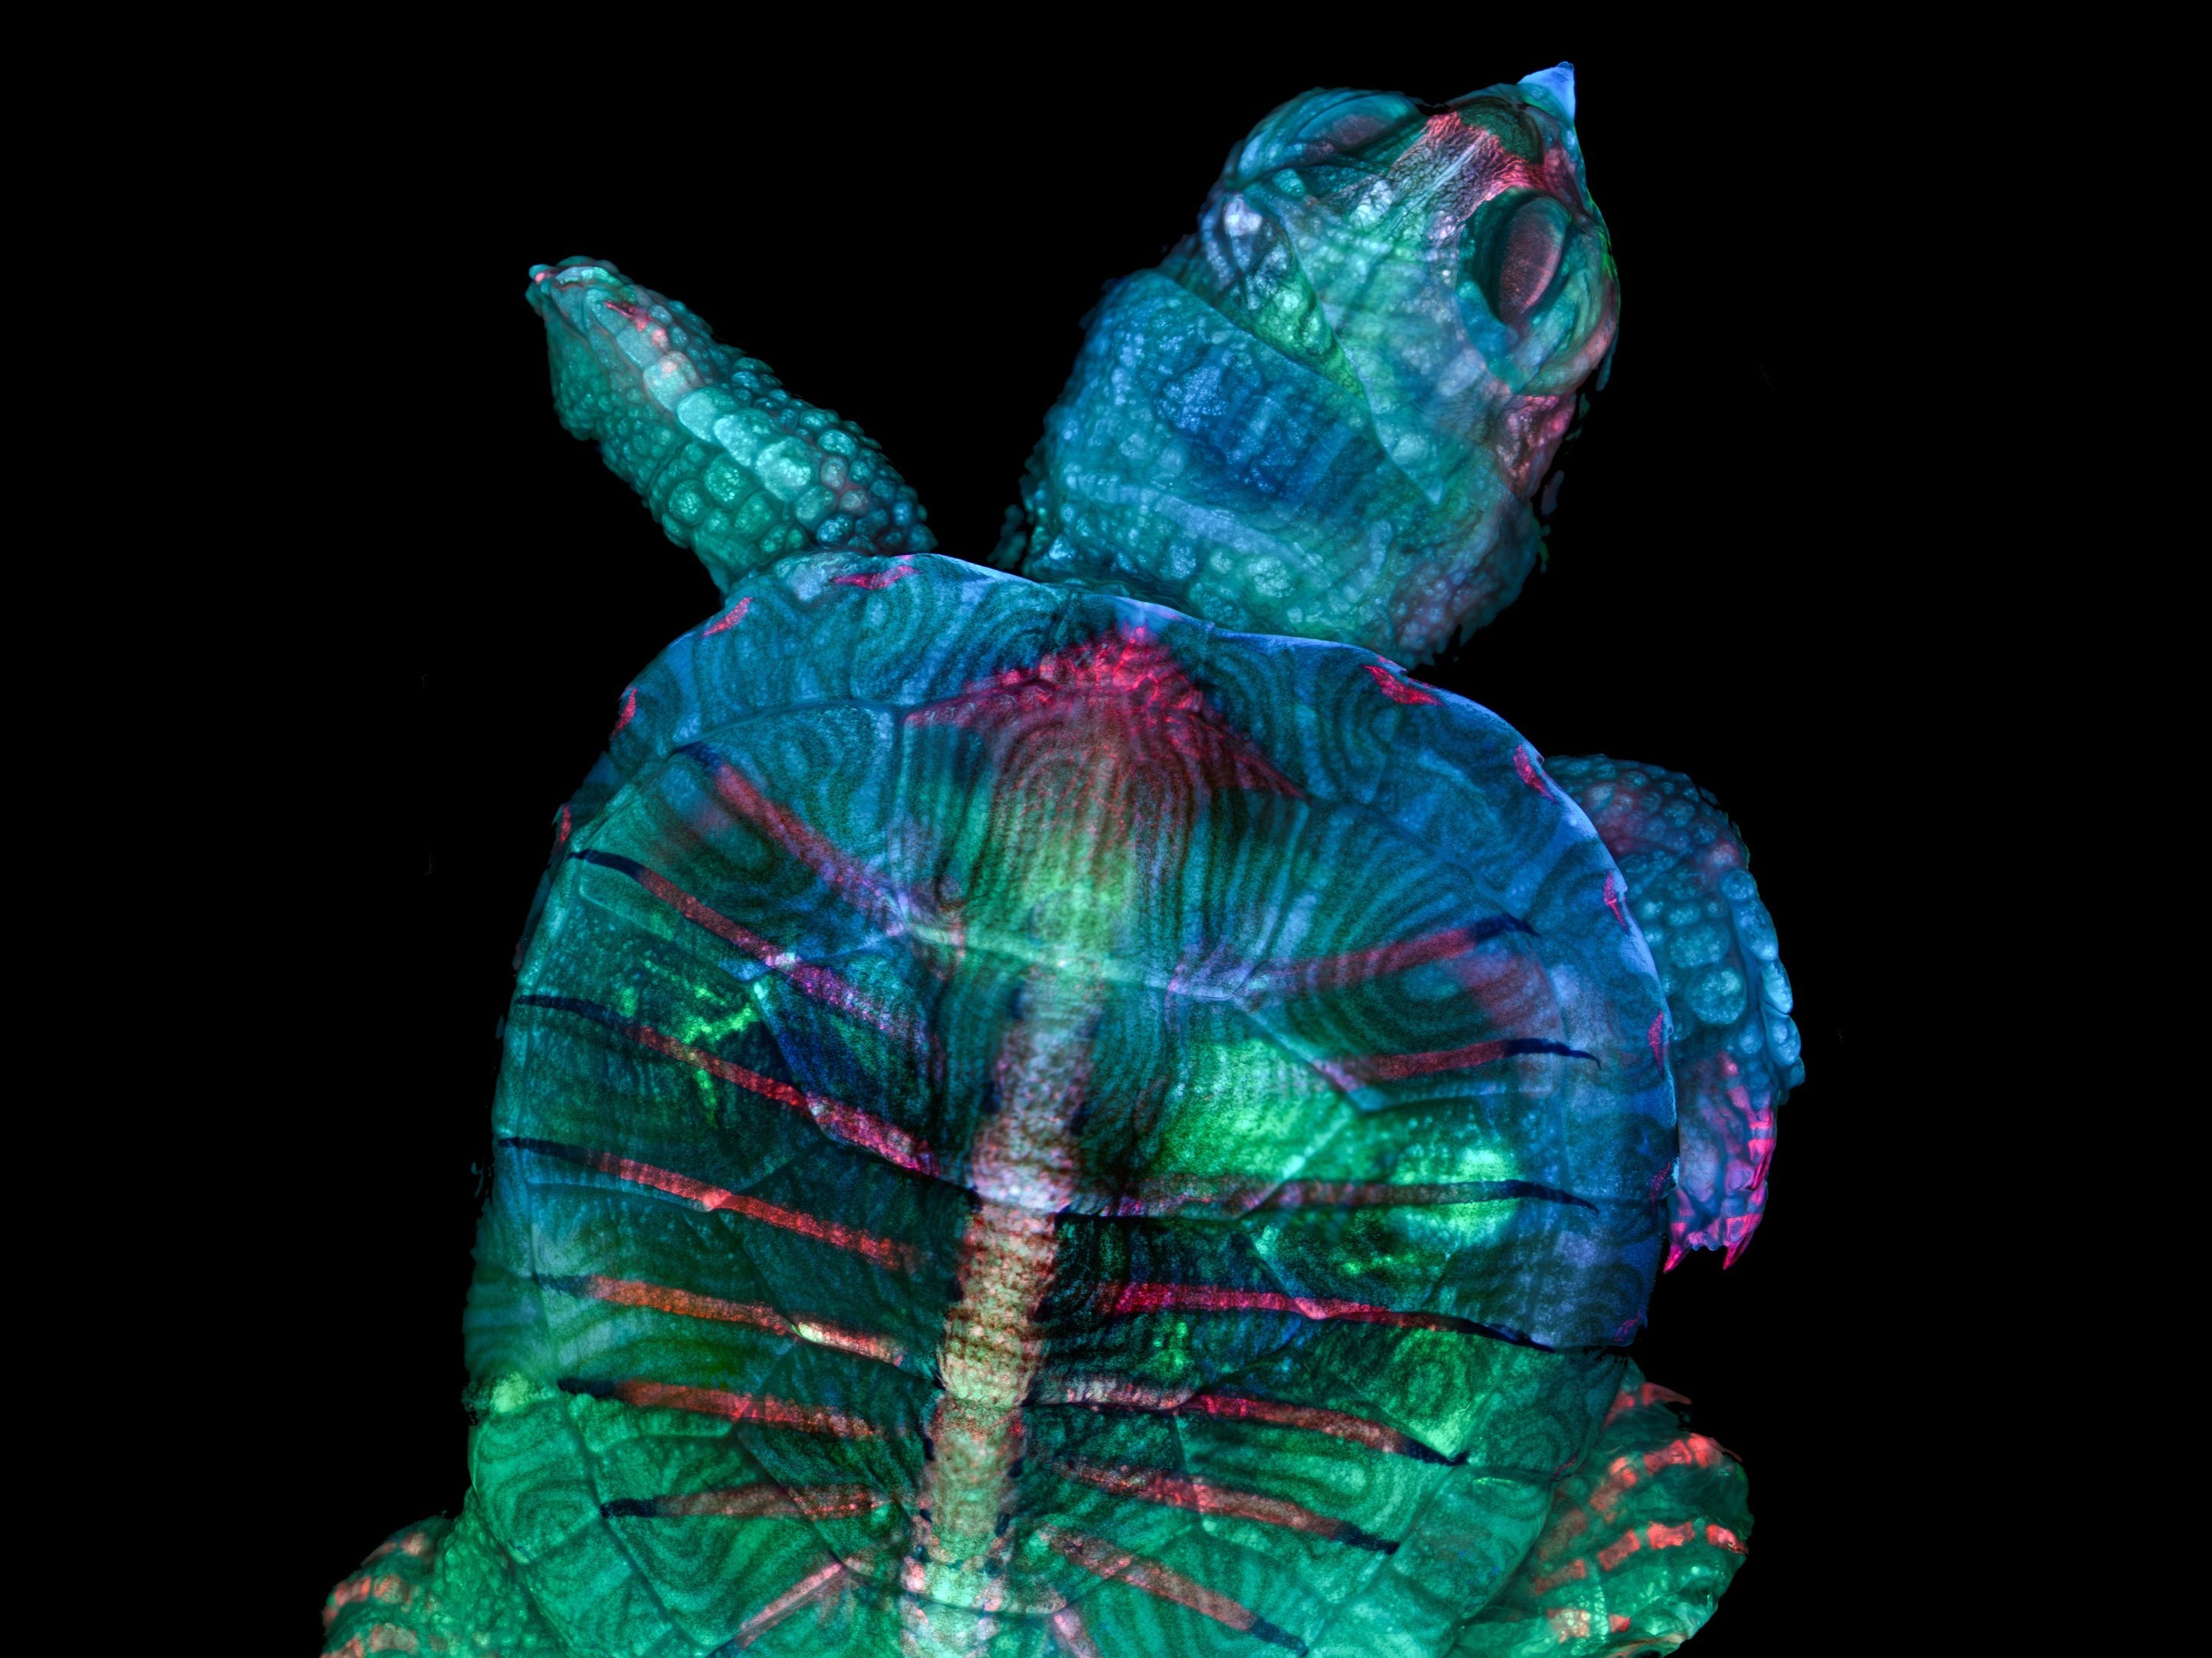 01 Fluoreszierende Schildkröte Embryo Mikroskop Foto Teresa Zgoda Kugler Nikon Small World 2019 NSW2019